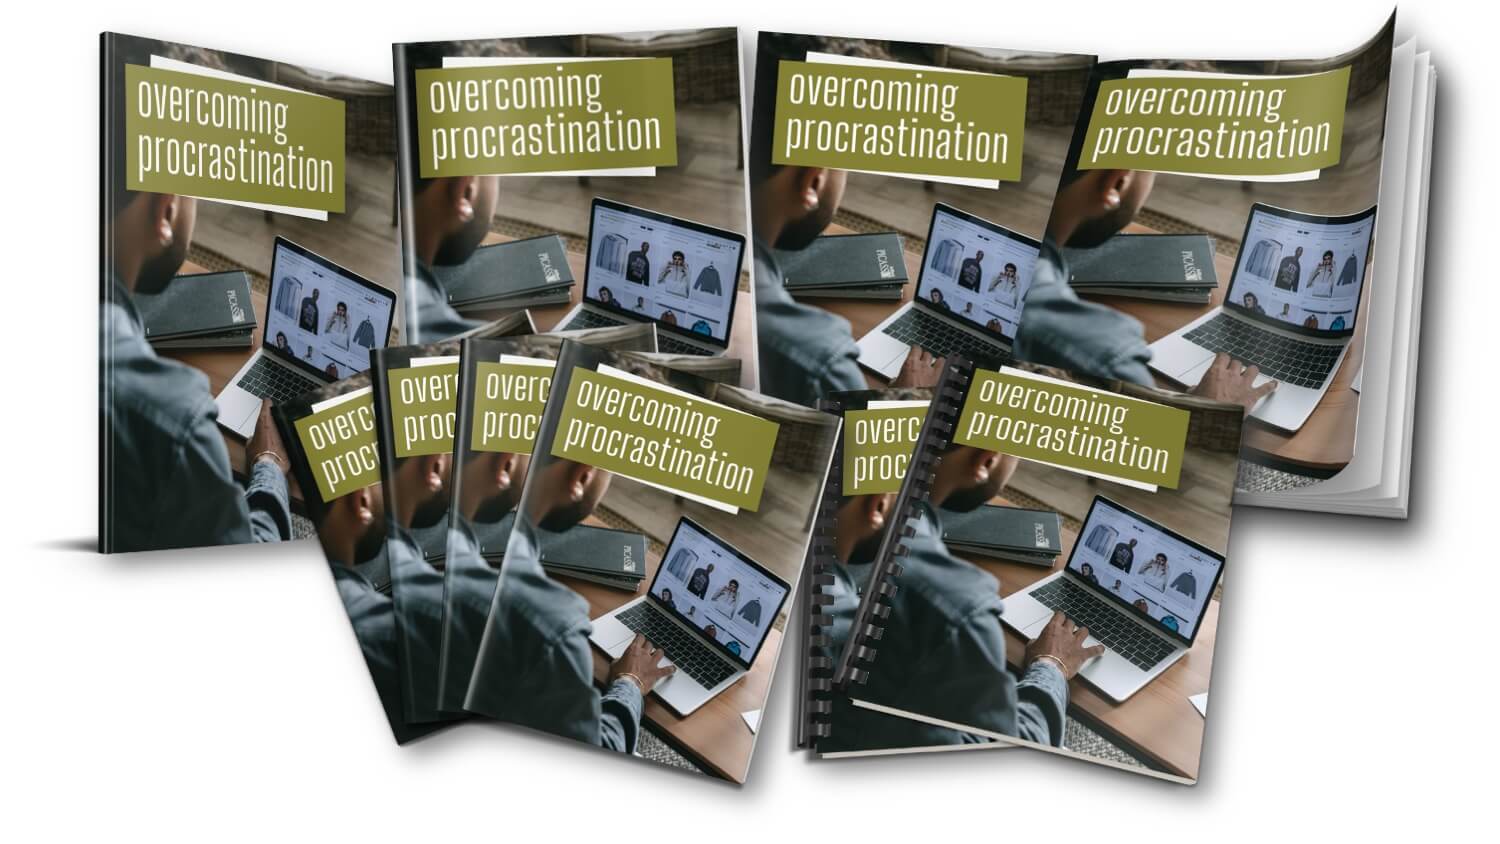 Overcoming Procrastination Report PLR composite marketing images v2